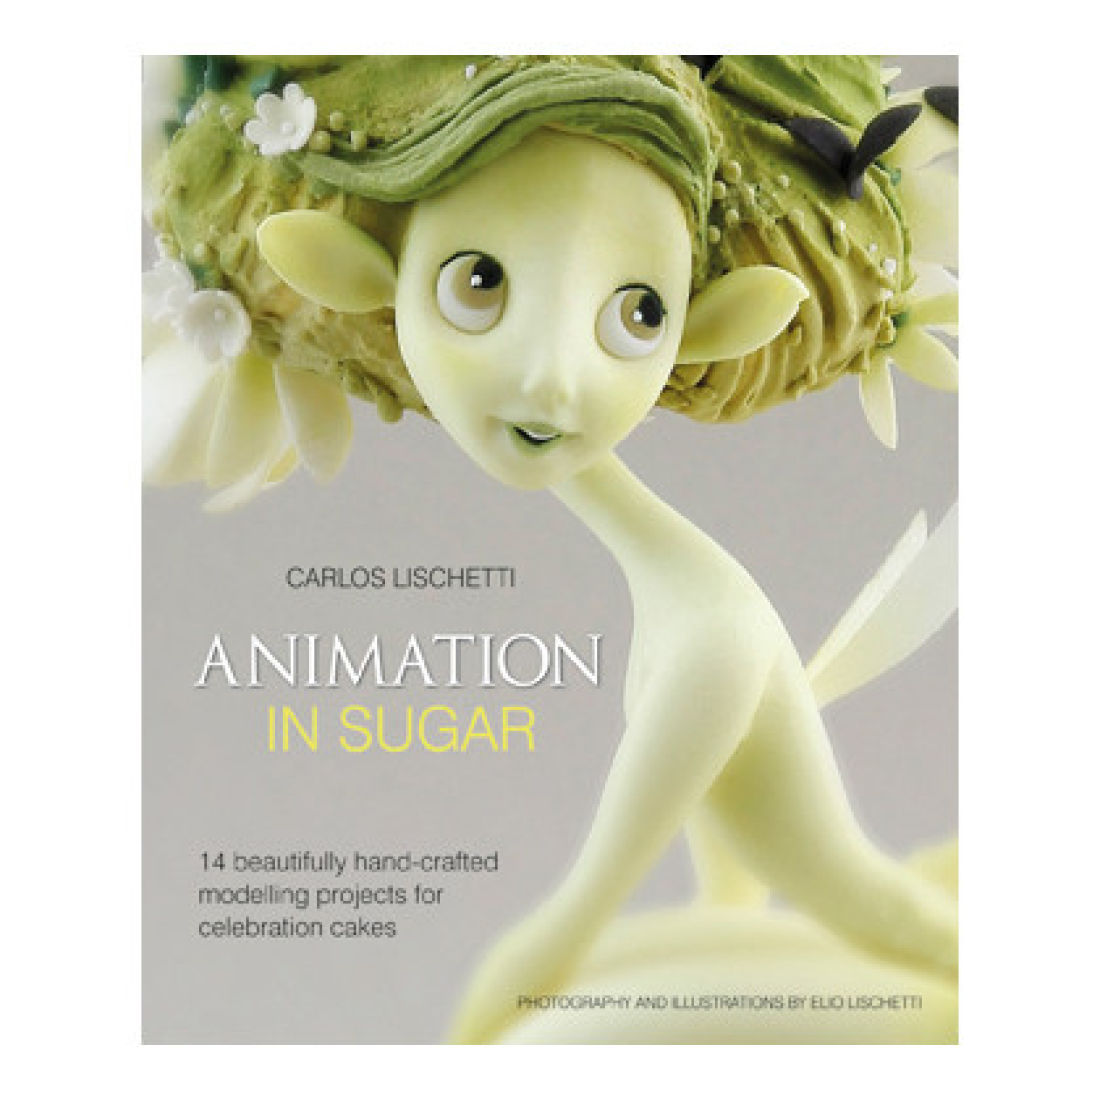 Animation in sugar carlos lischetti pdf files online